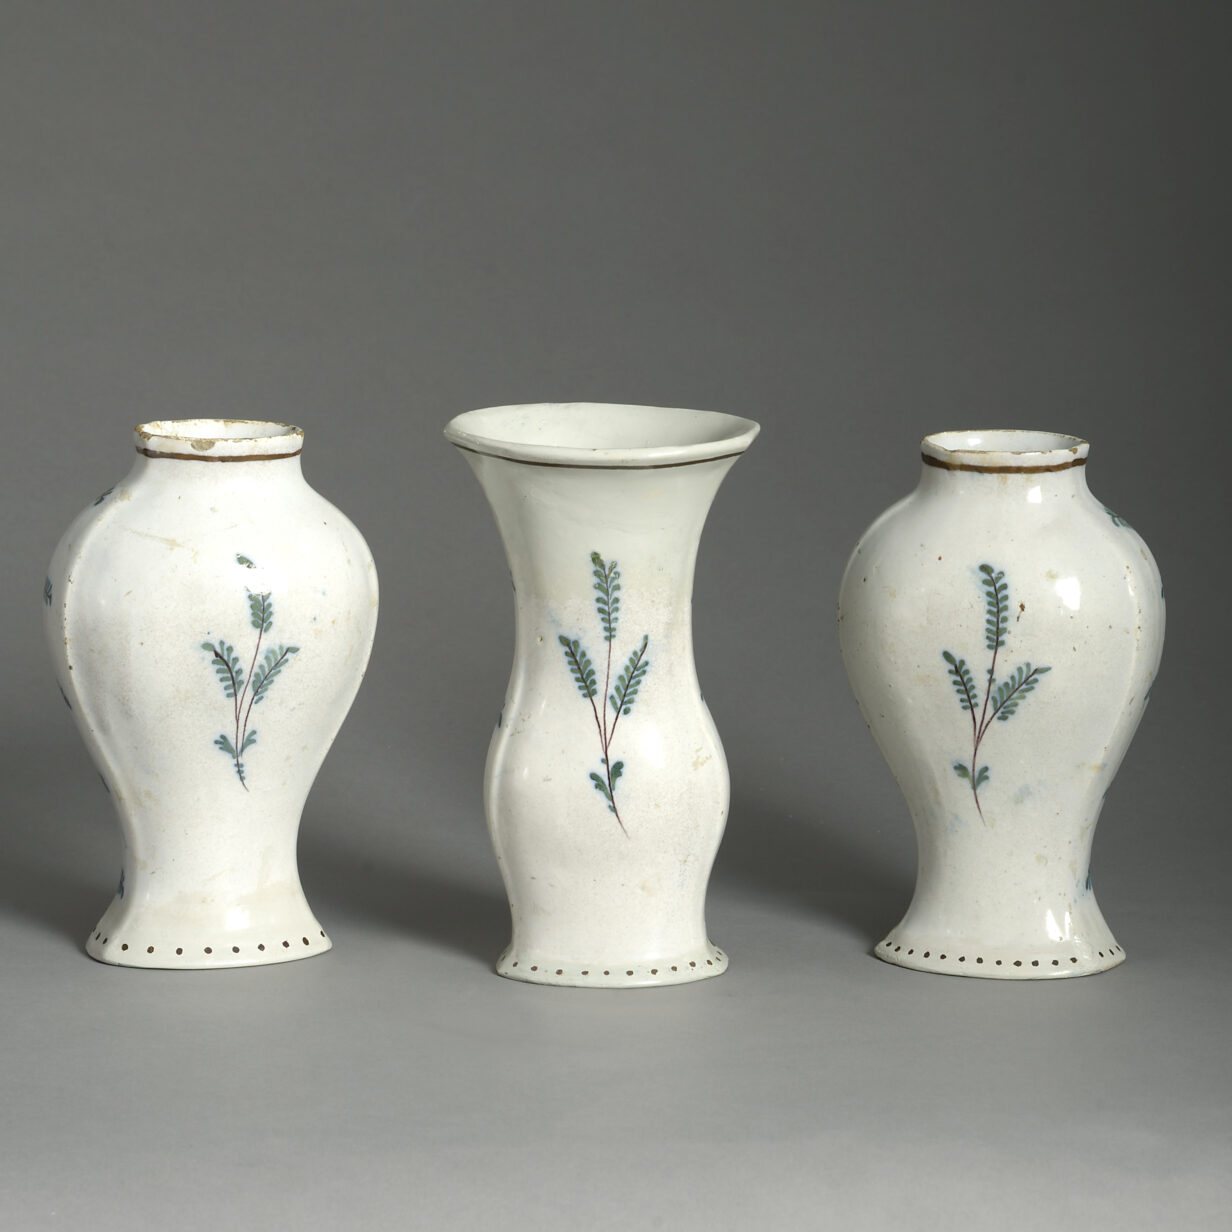 Three late 18th century delft pottery vases